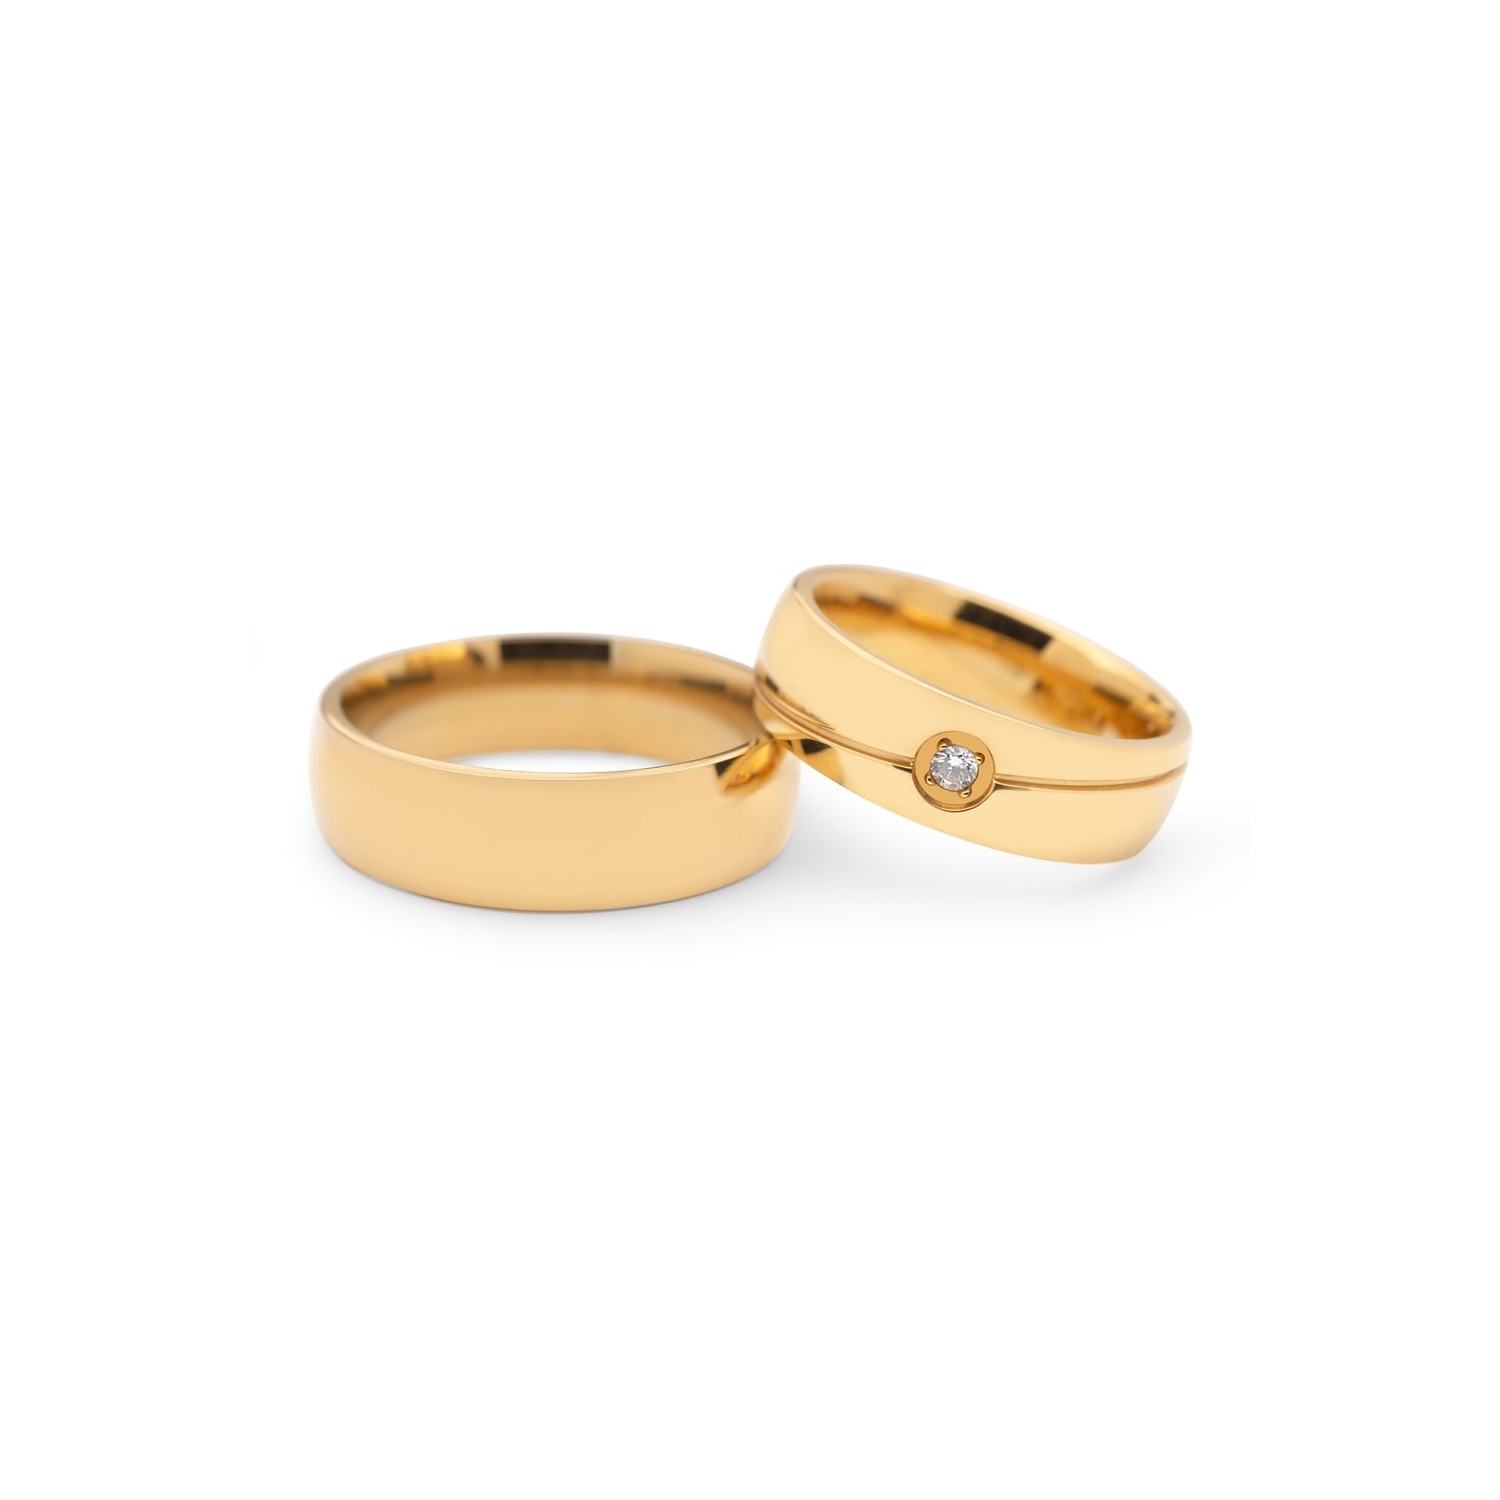 Golden wedding rings with diamonds "VKA 120"